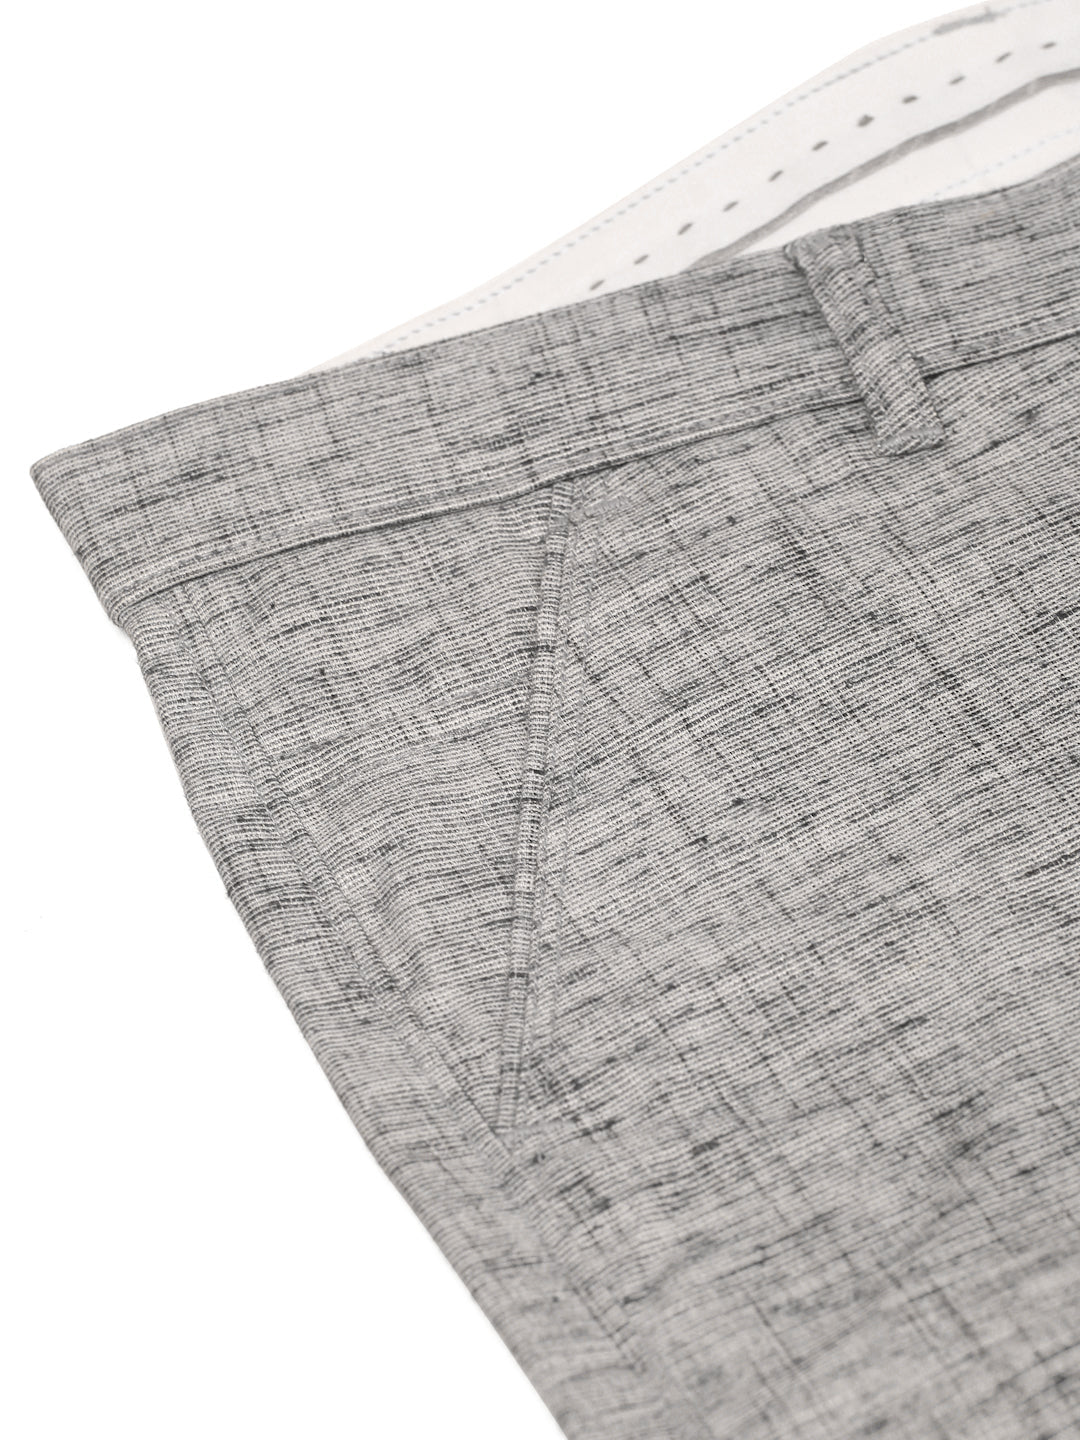 Men's Grey Linan Cotton Formal Trousers ( FGP 273 Grey ) - Jainish